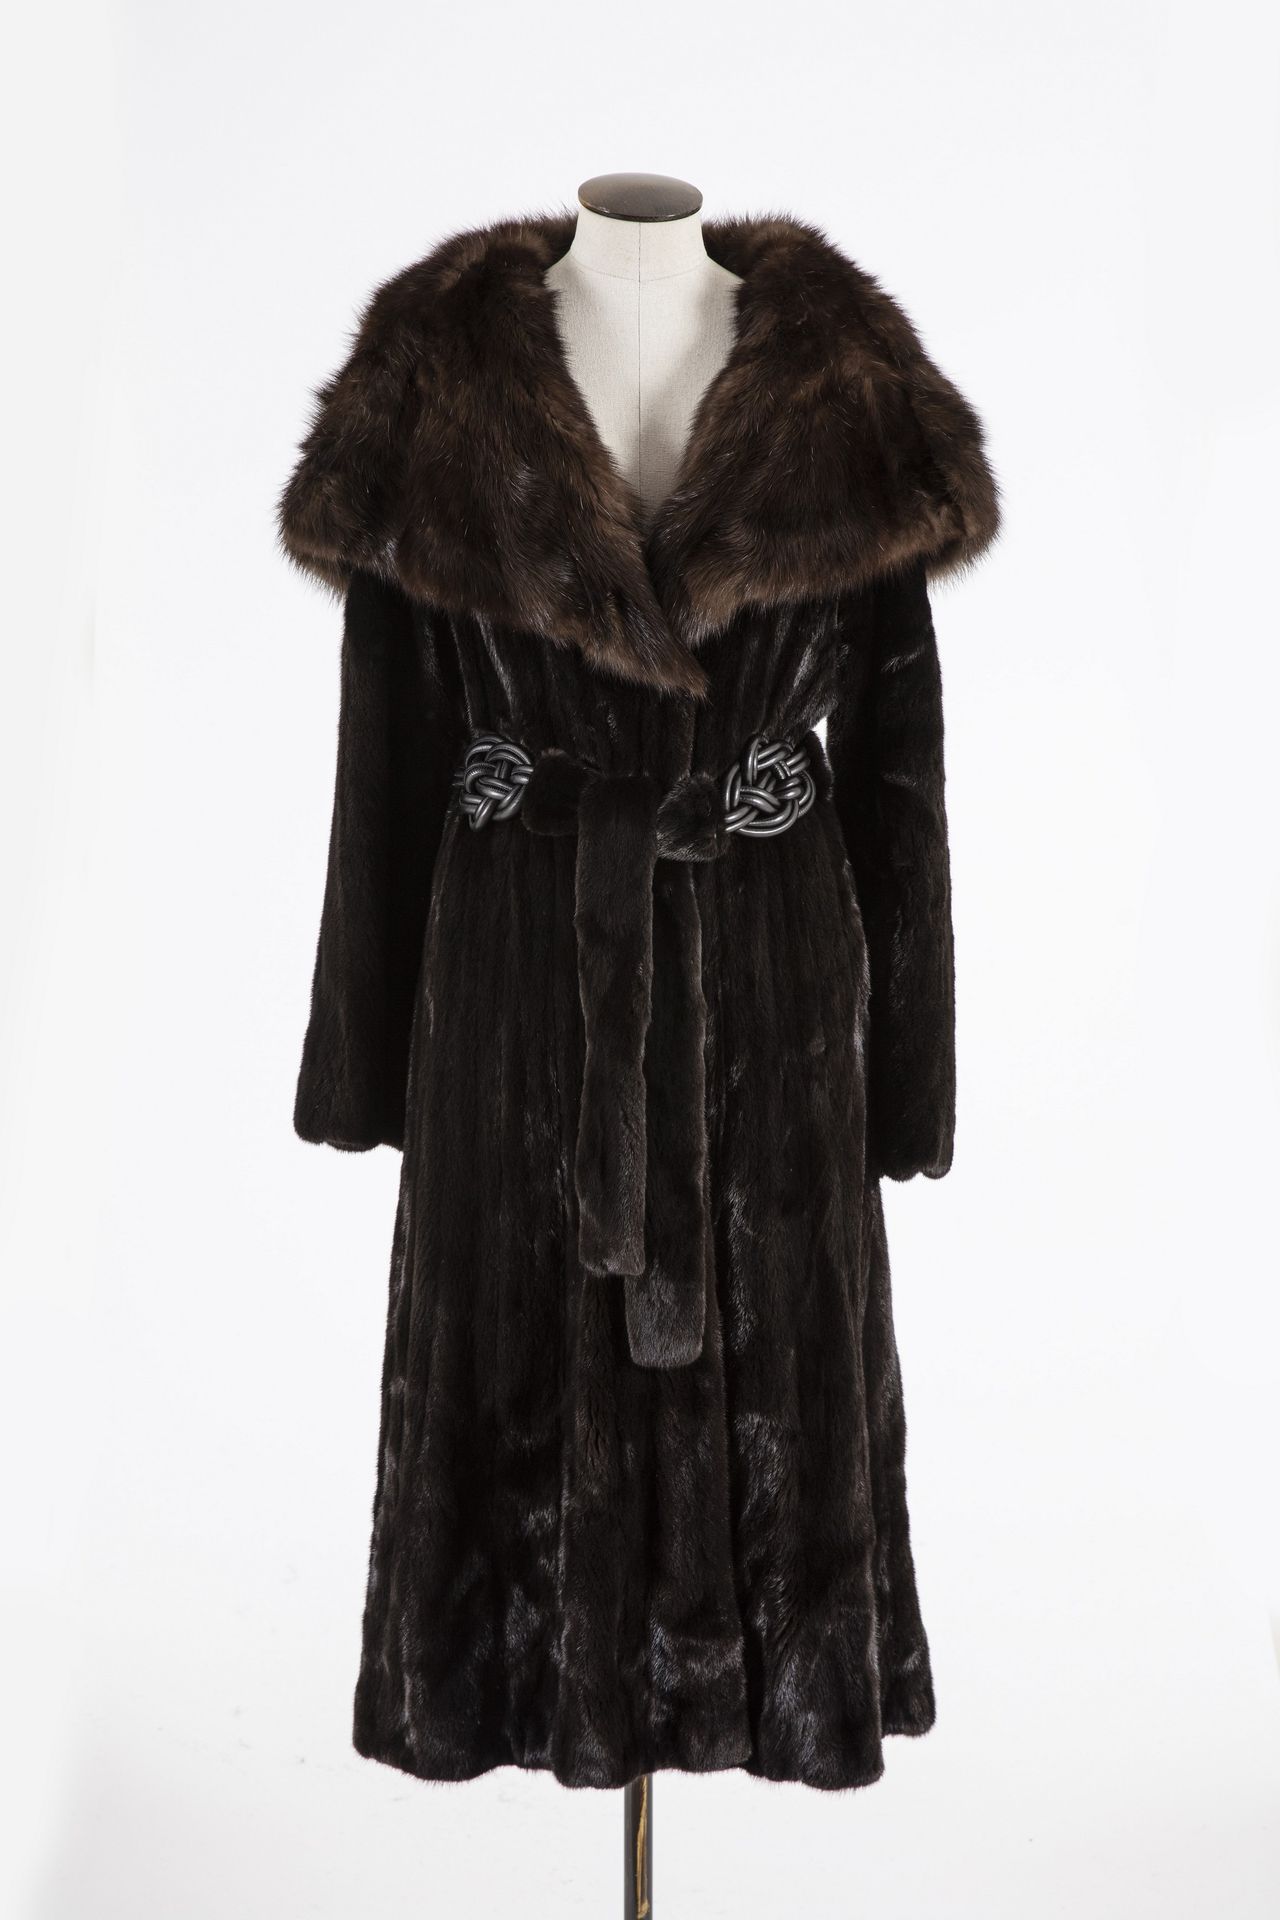 Null NEGRO GLAMA : abrigo largo de visón chocolate con capucha, bolsillos latera&hellip;